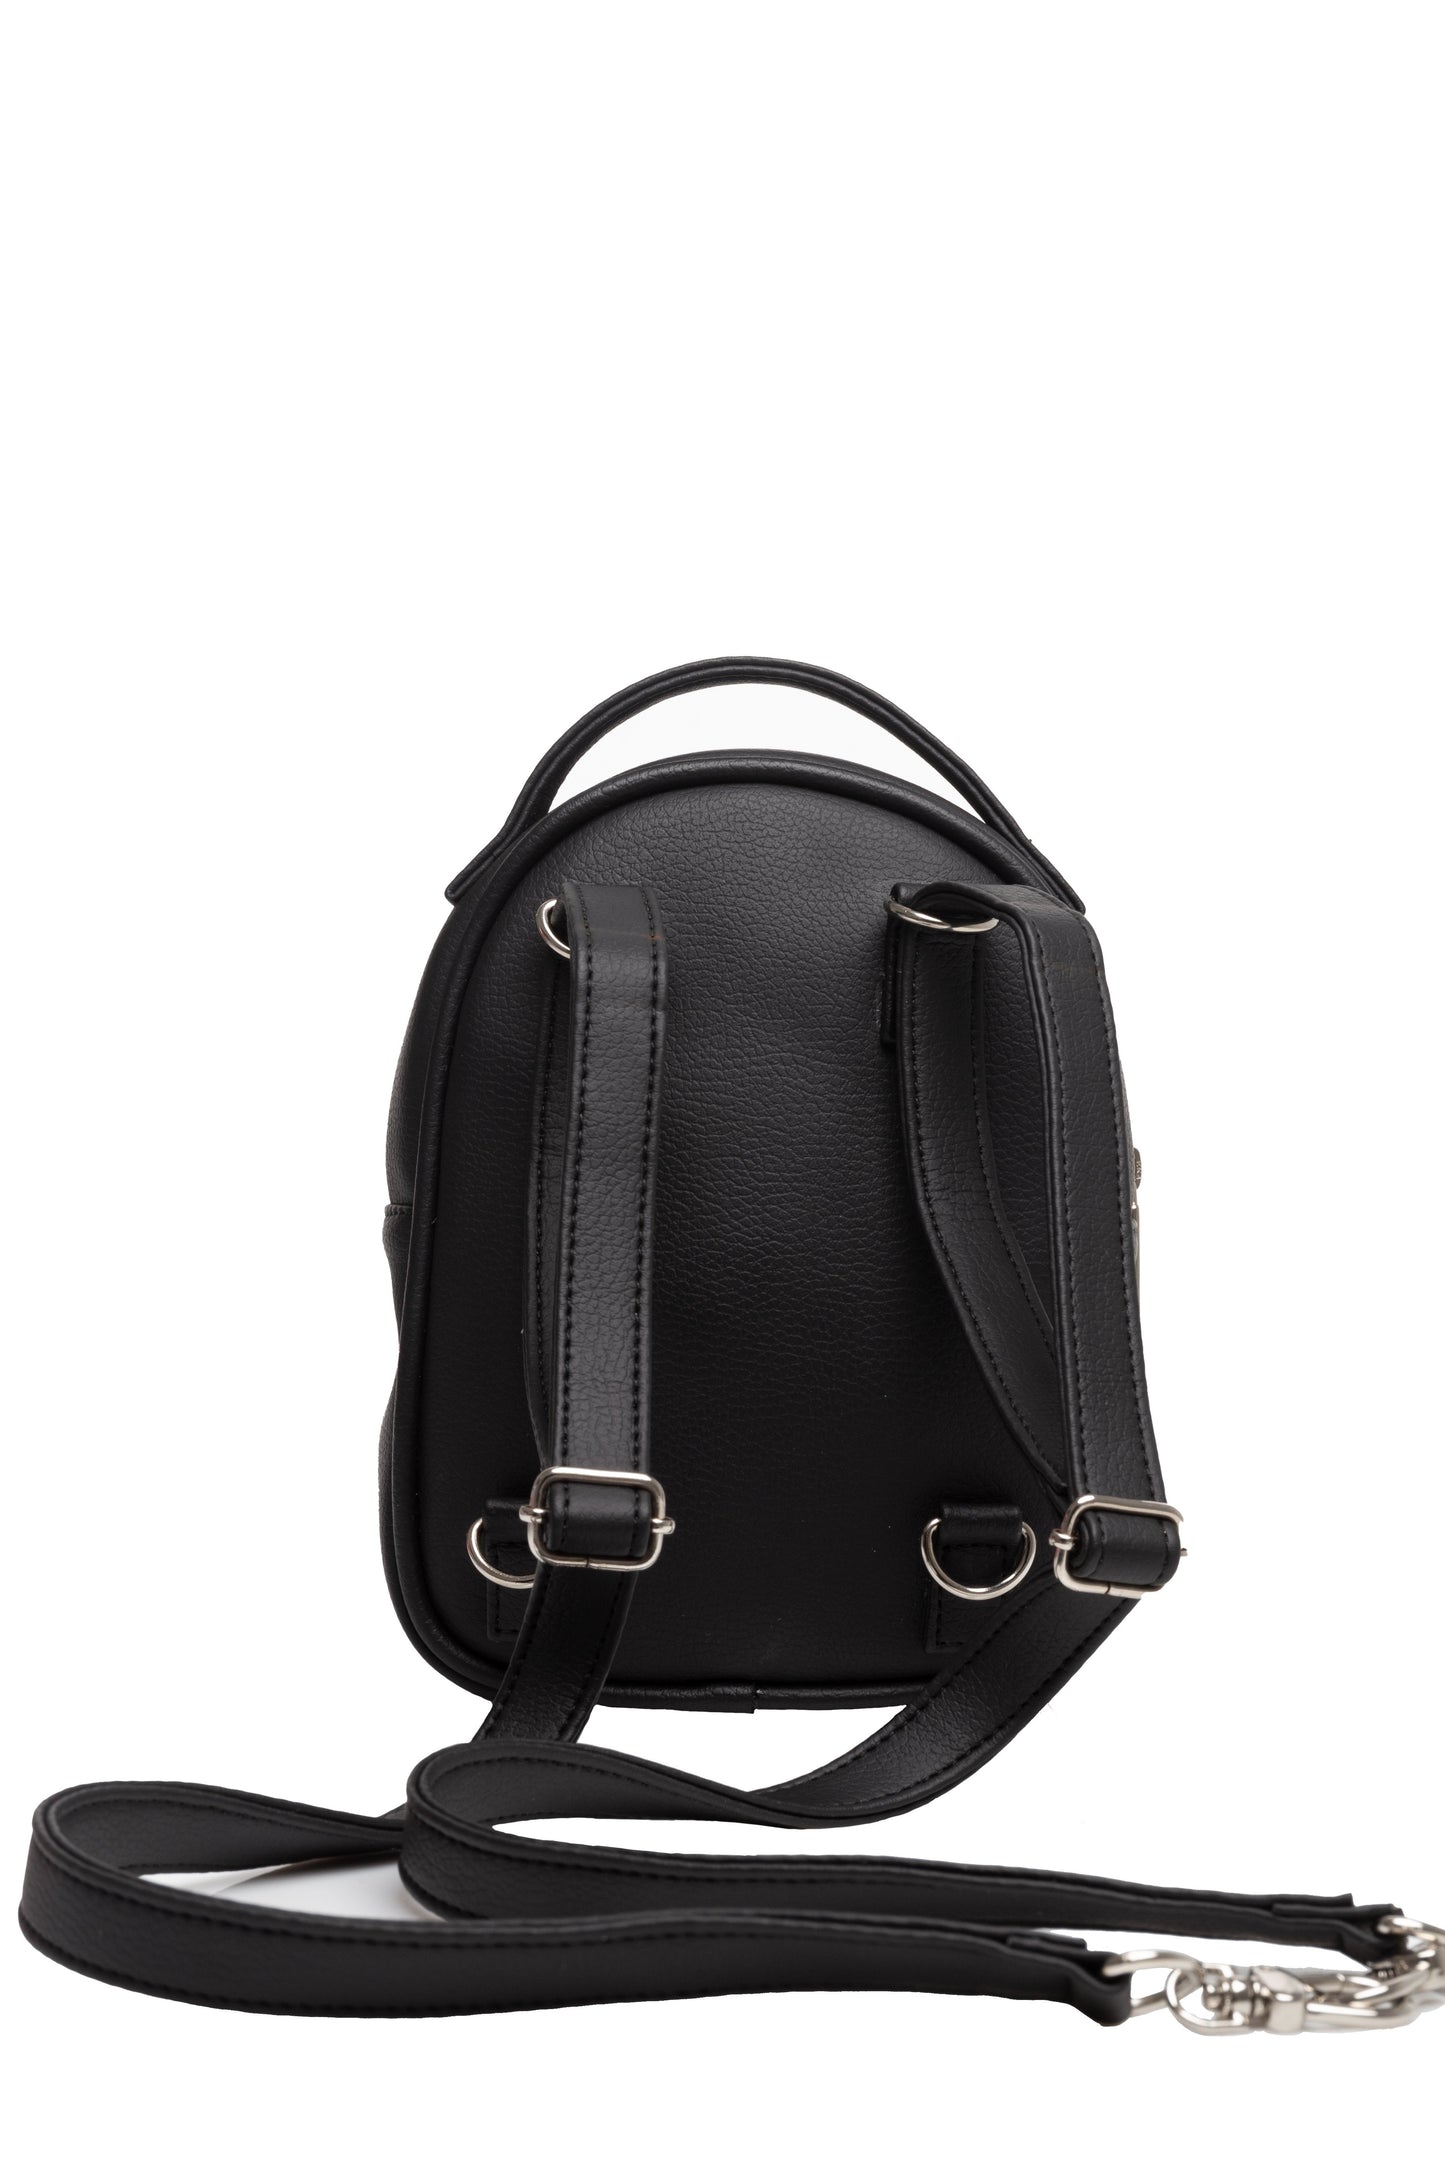 Black baby backpack